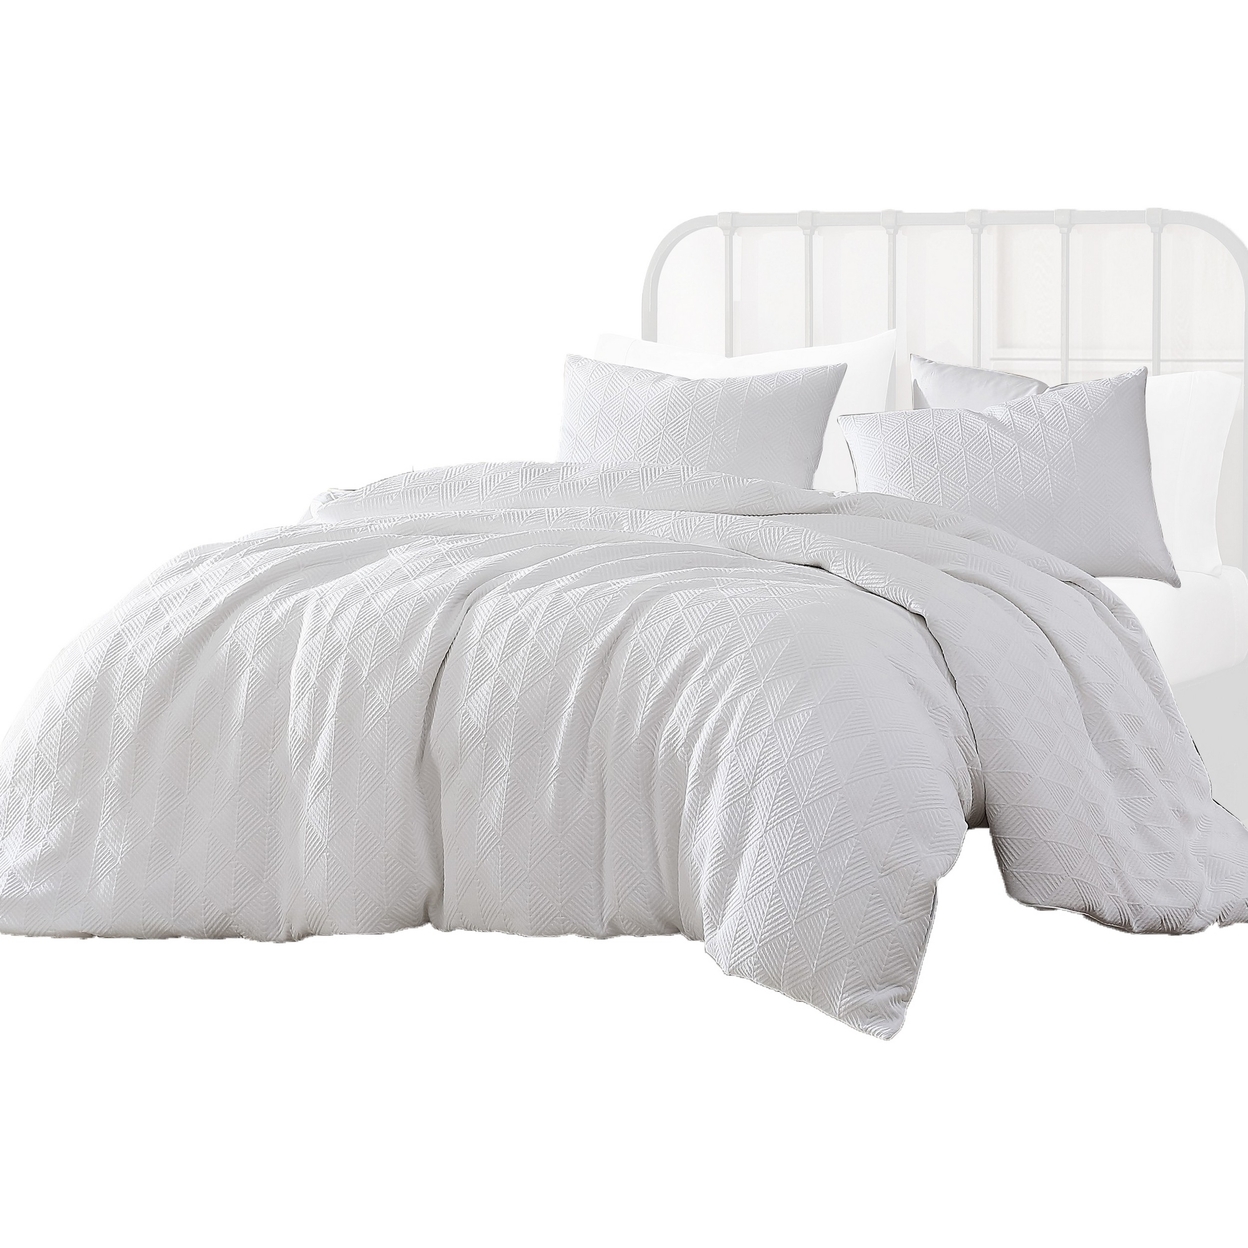 Max 4 Piece King Size Duvet Comforter Set, Diamond Woven White Cotton - Saltoro Sherpi